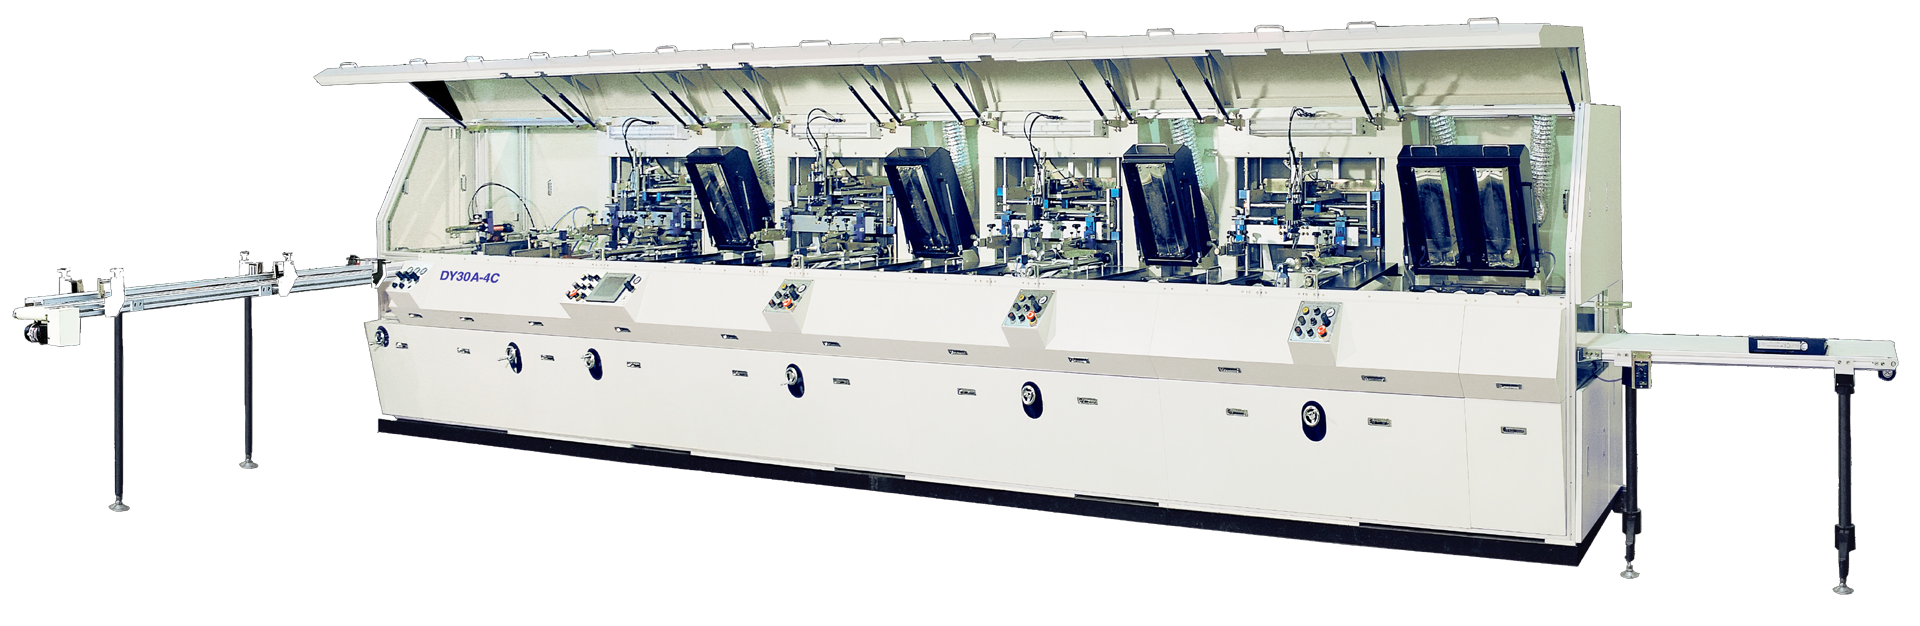 DYSS Silk Screen Printer 30A Series, 대영시스템 실크 스크린 프린터 30A 시리즈, 곡면 및 반곡면 인쇄기